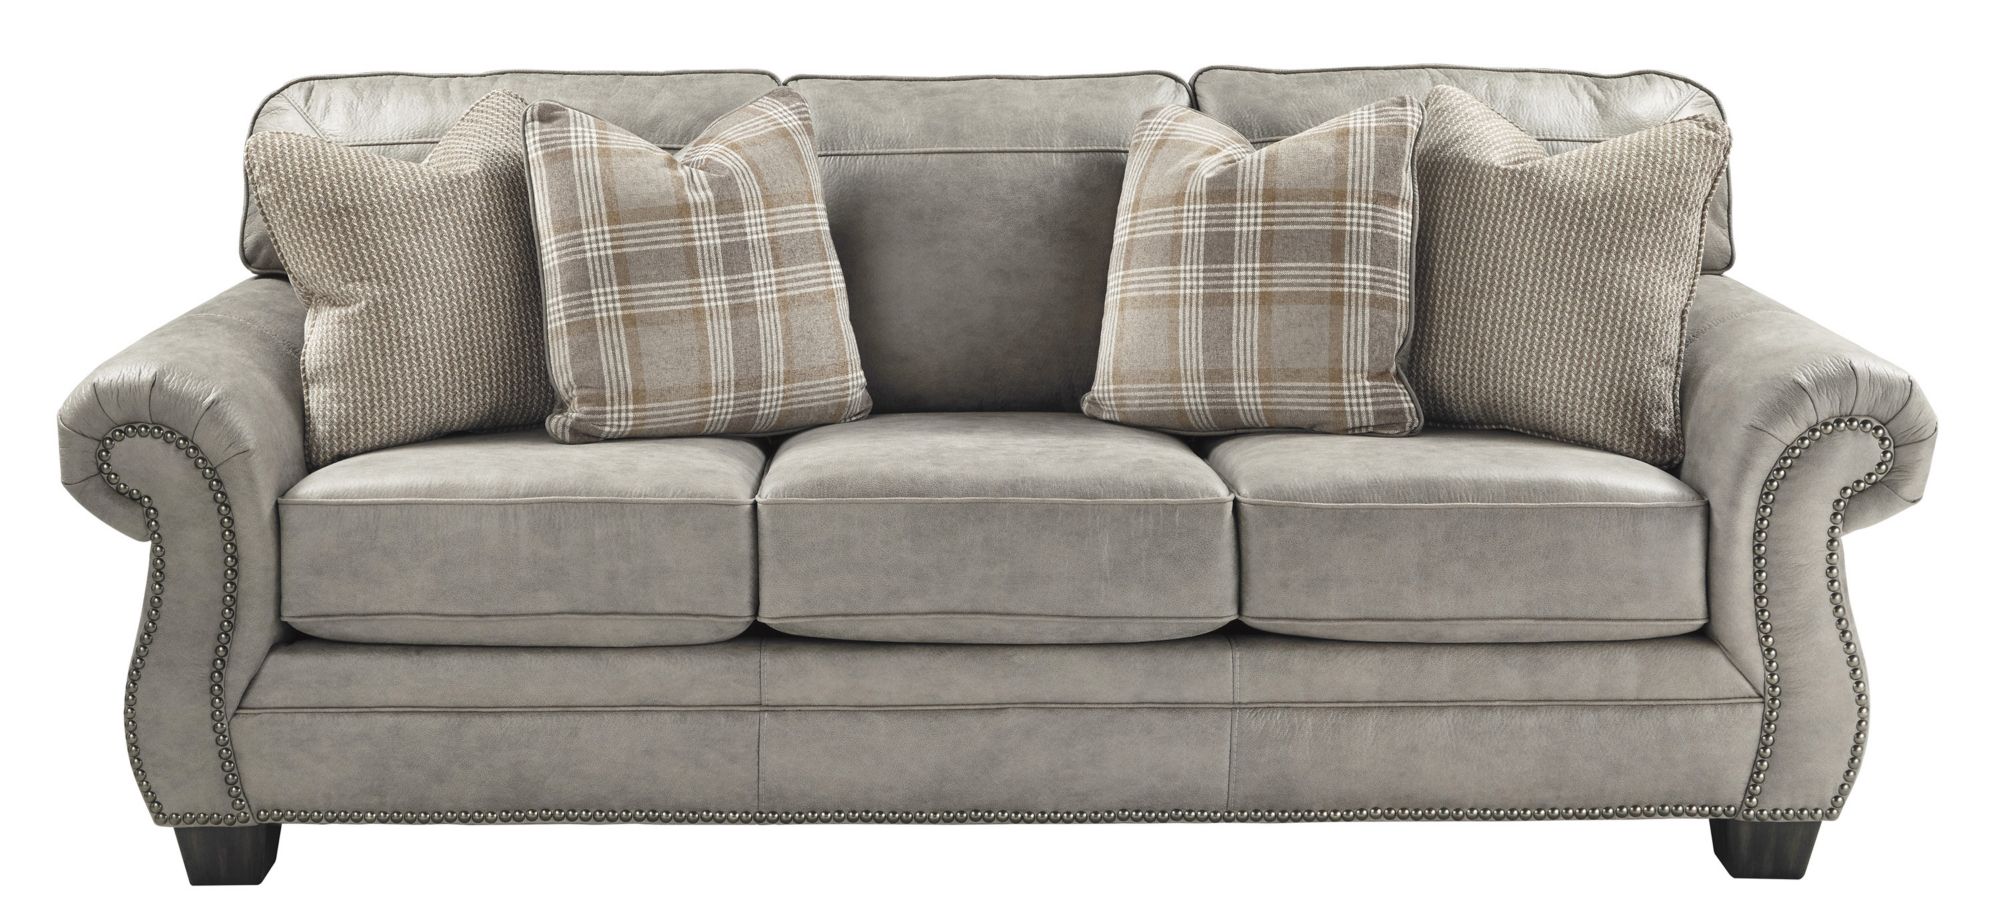 Olsberg Queen Sofa Sleeper in Steel by Ashley Furniture